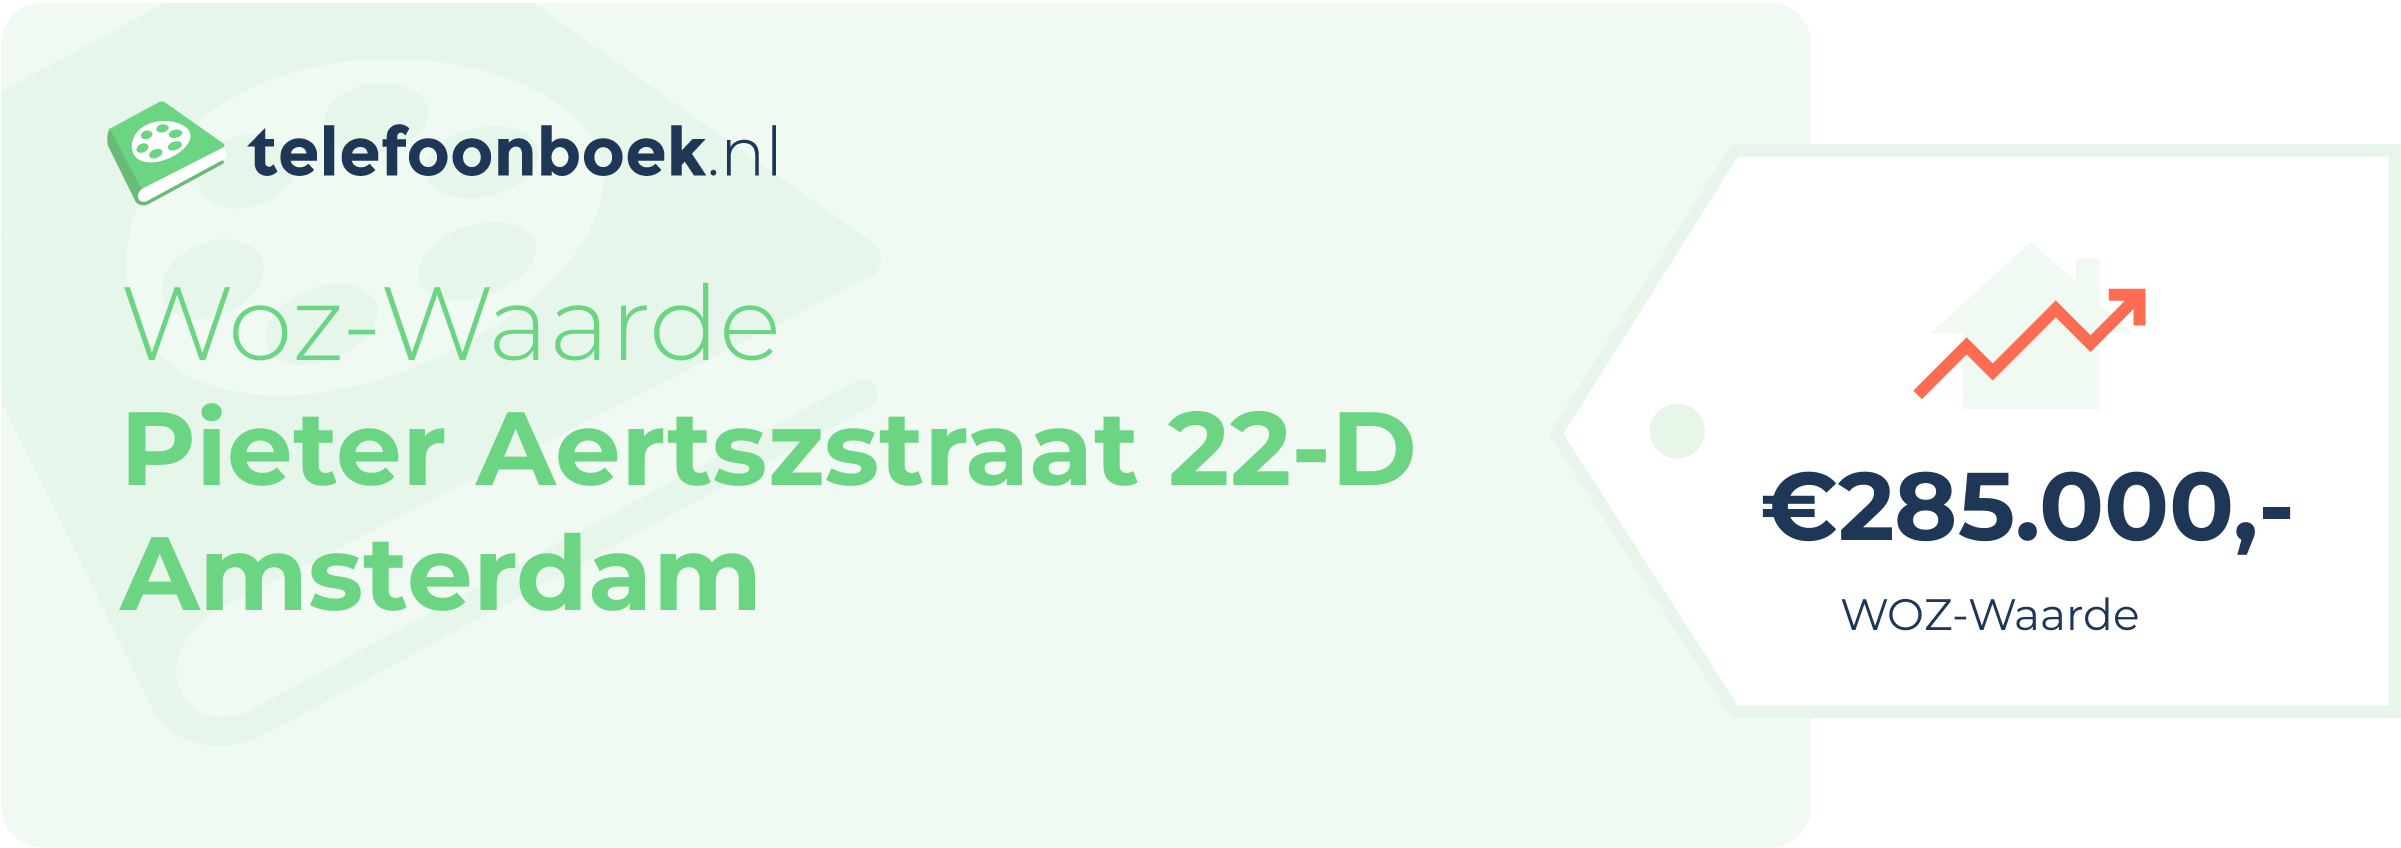 WOZ-waarde Pieter Aertszstraat 22-D Amsterdam